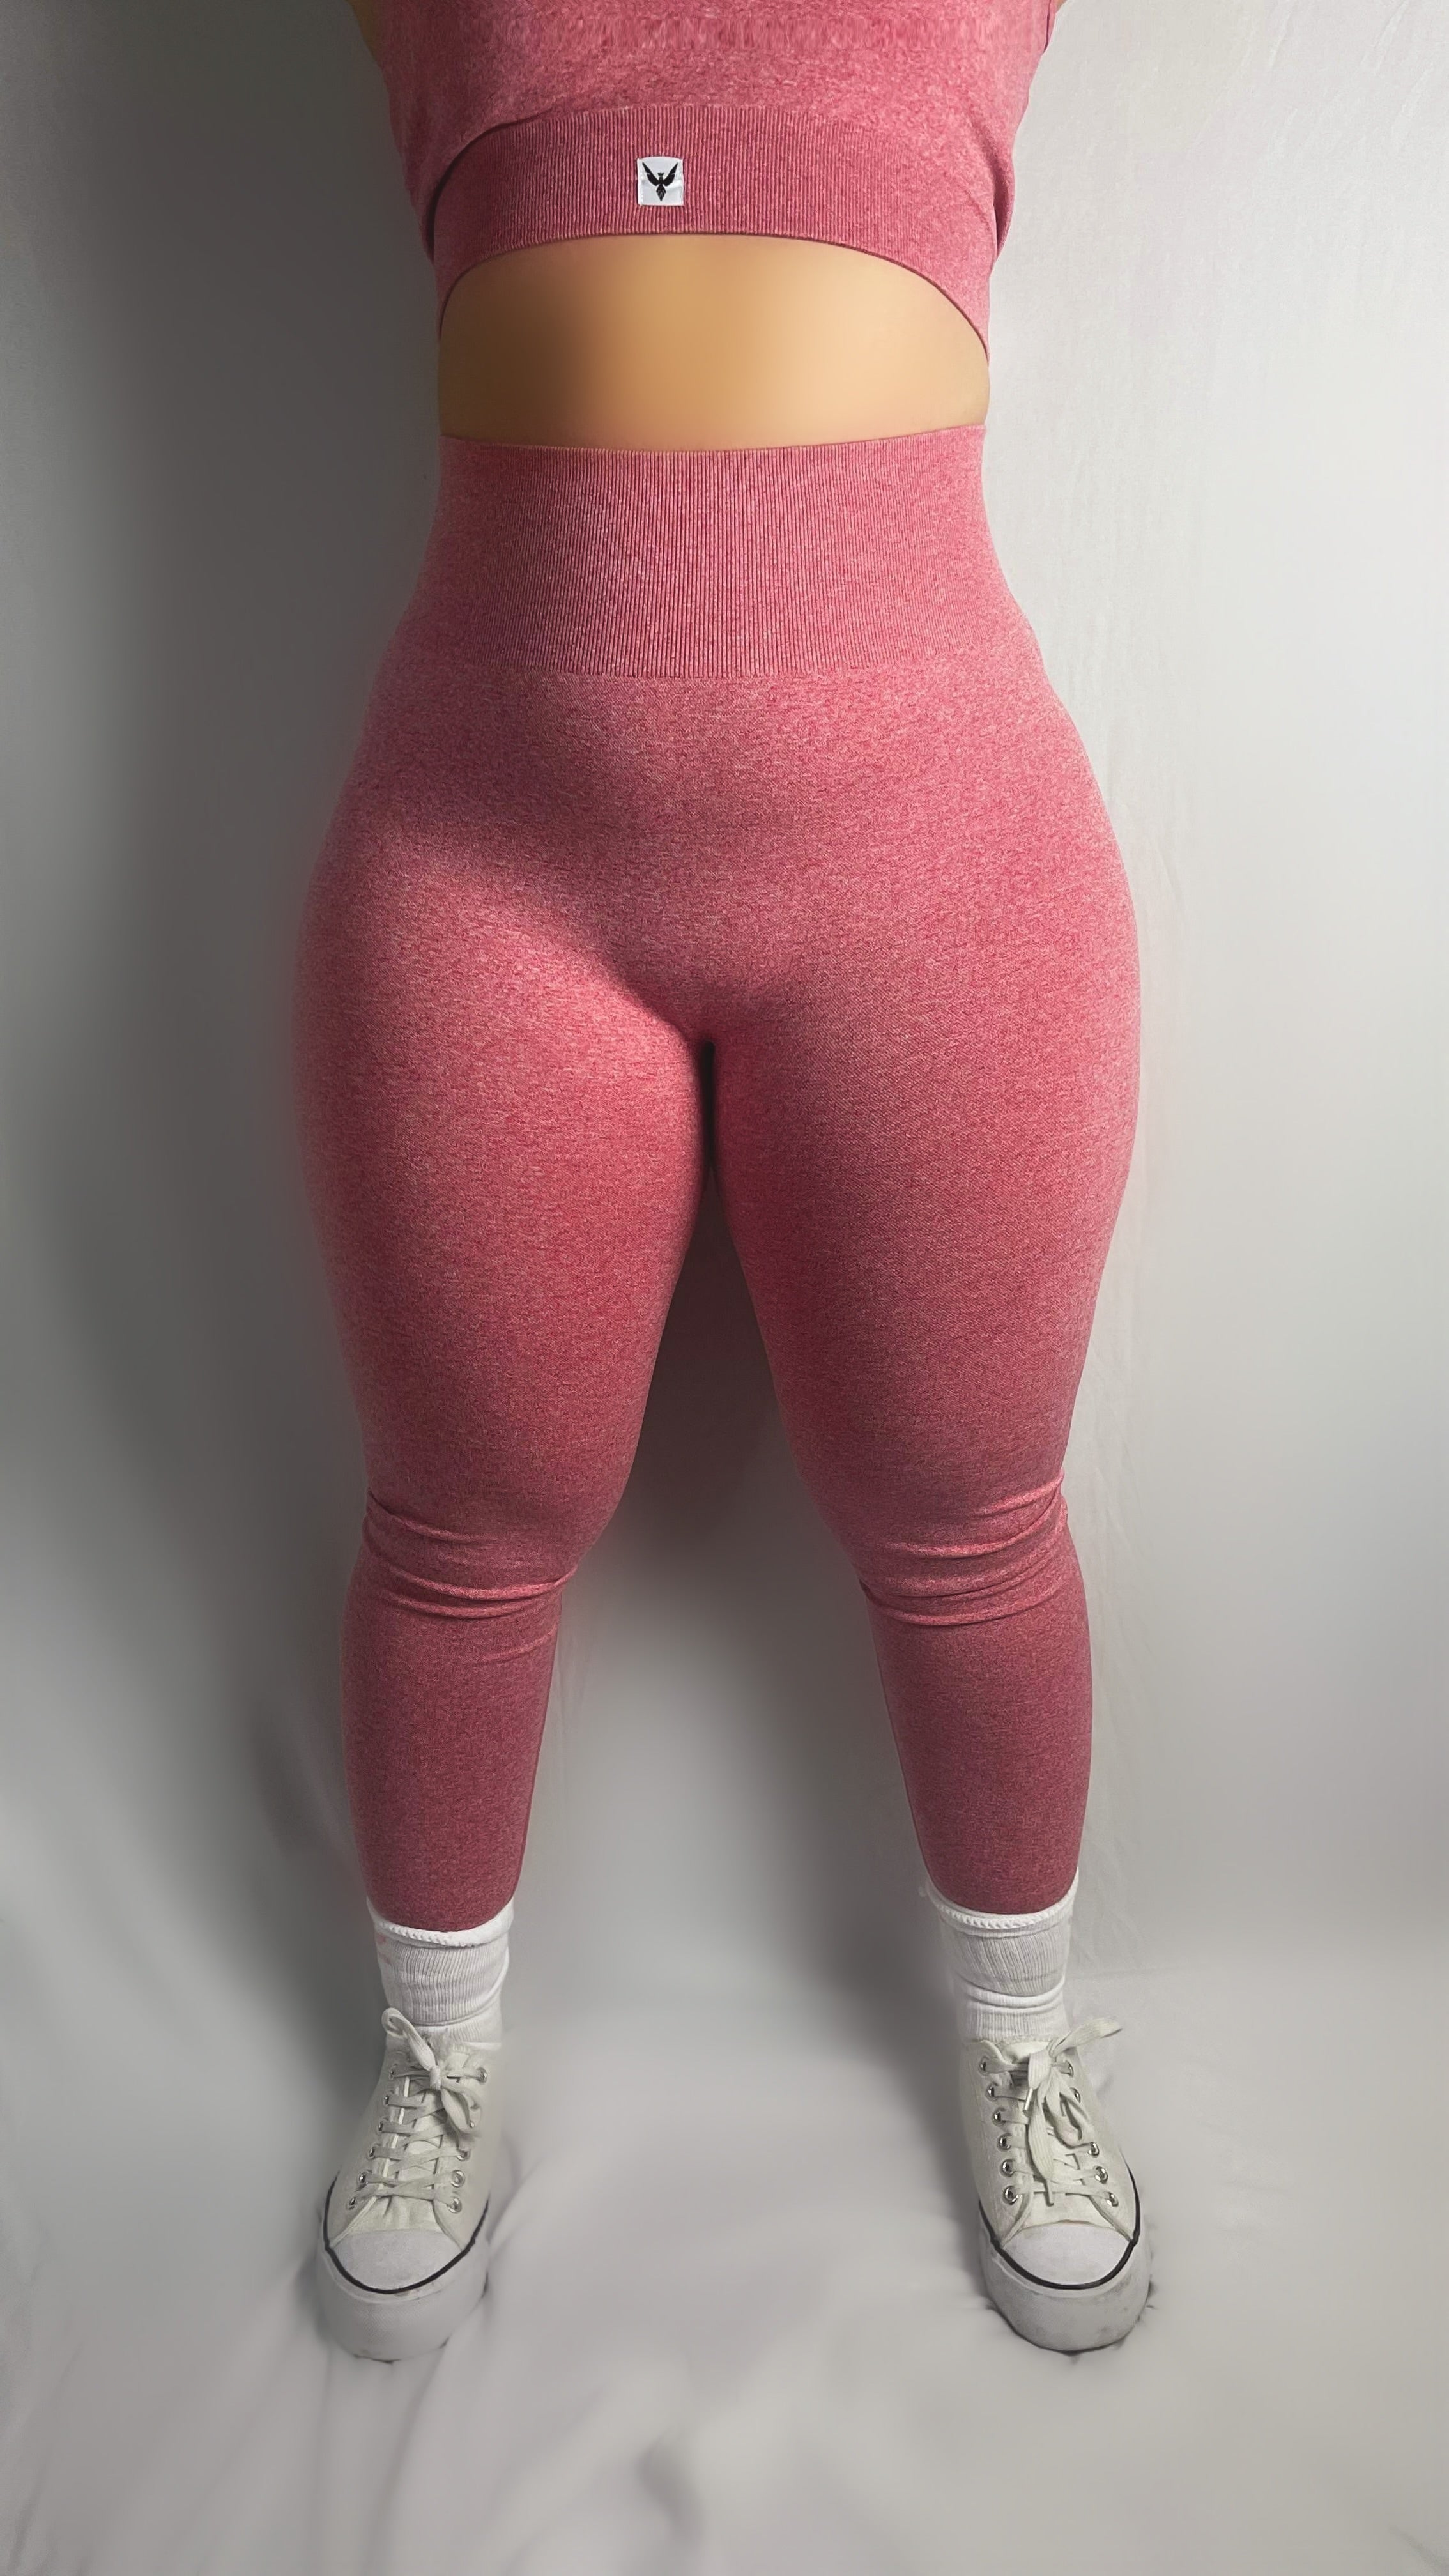 archibald davis add hot leggings photo photo